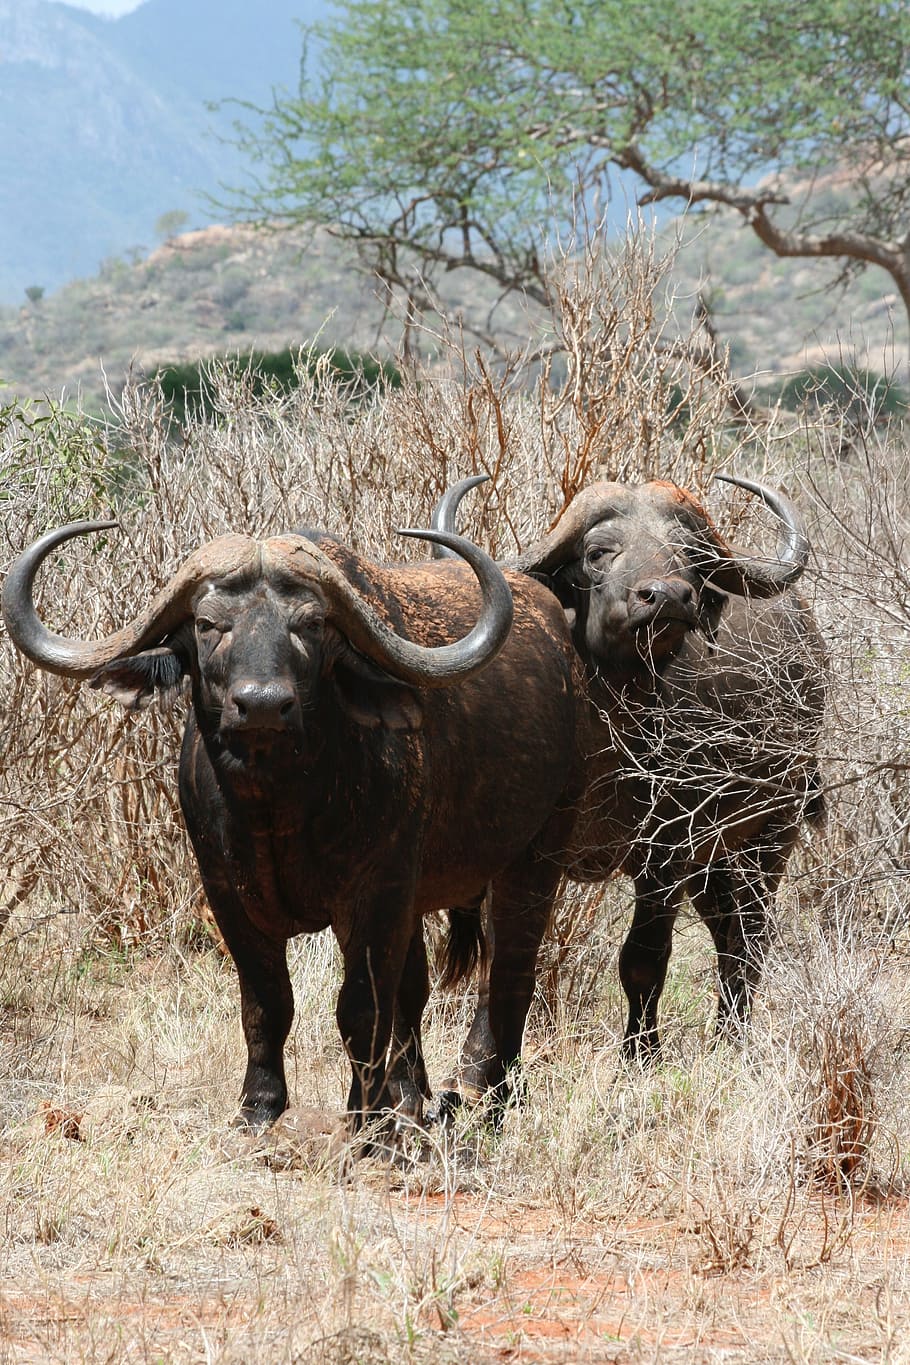 Buffalo, Horns, Safari Park, Kenya, horned, animal wildlife, animal themes, animals in the wild, water buffalo, animal